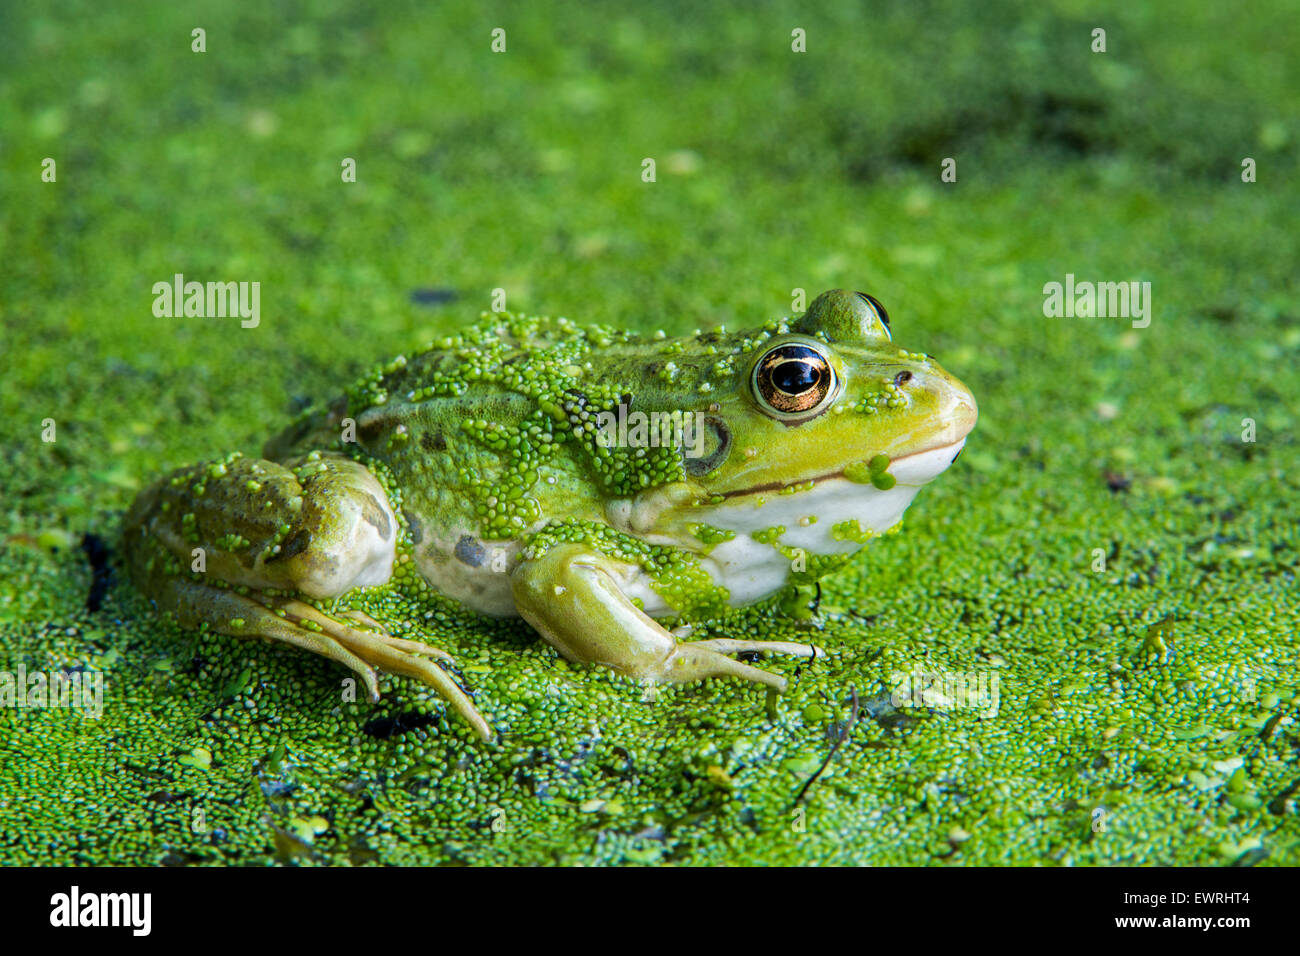 Edible frog / common water frog / green frog (Pelophylax kl. esculentus / Rana kl. esculenta) sitting among duckweed in pond Stock Photo